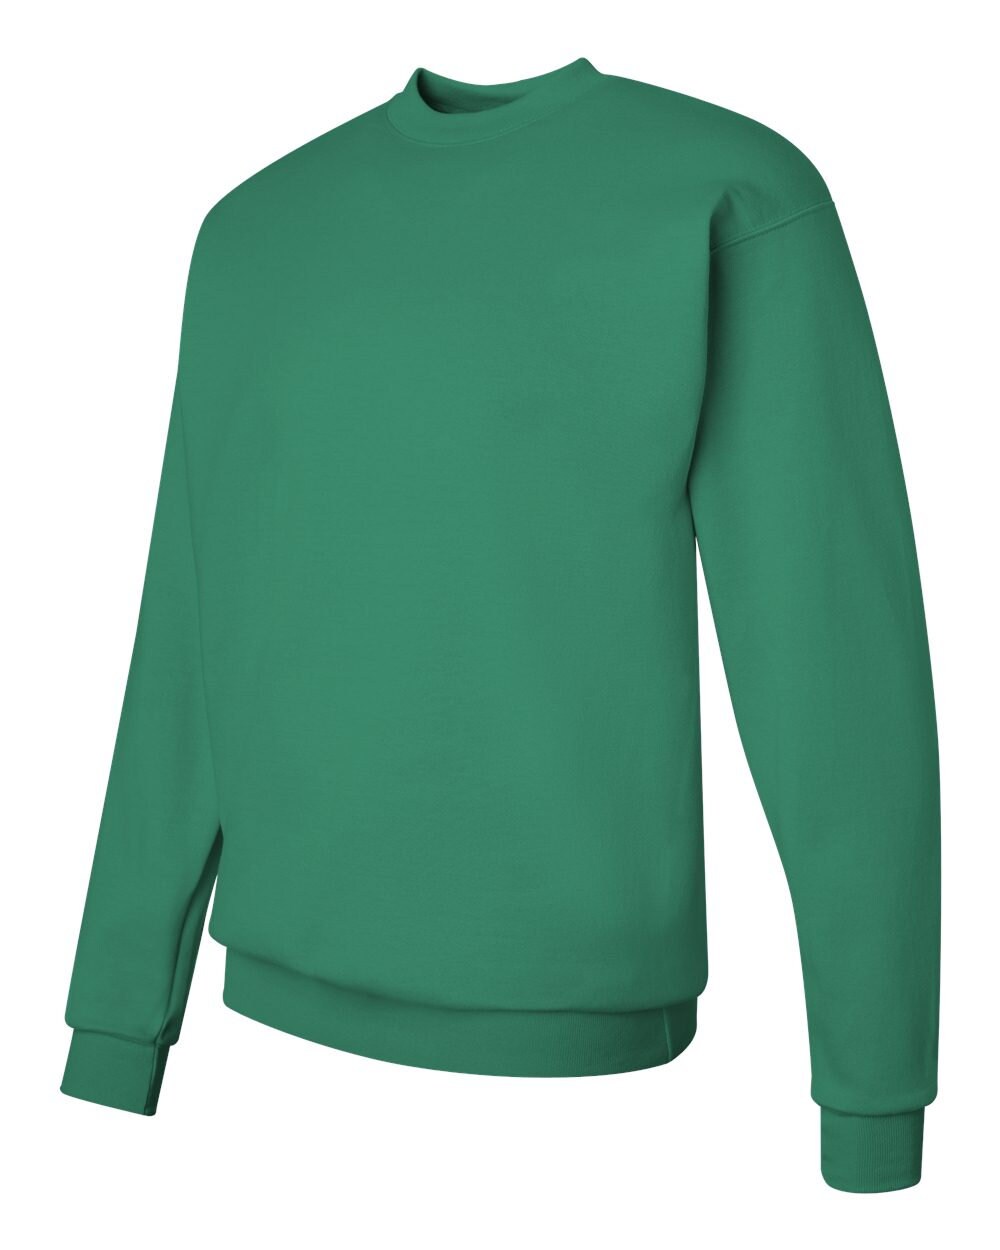 Nobody Wants Your Fing Sheep Crewneck Sweatshirt inspired | Etsy